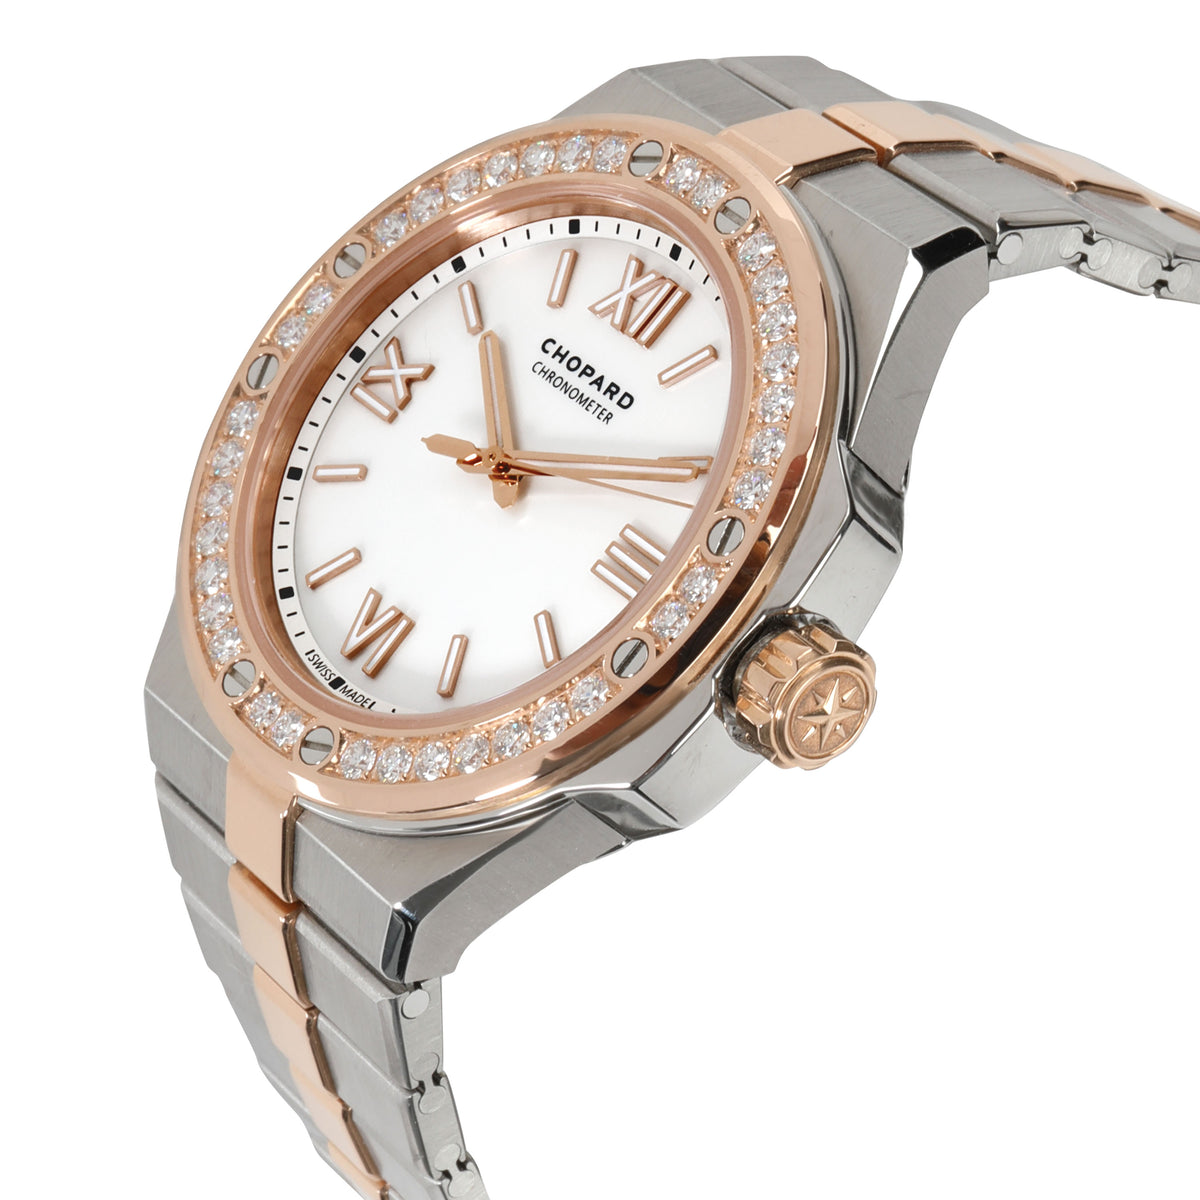 Chopard Alpine Eagle 298601-6002 Women's Watch in 18kt Stainless Steel/Rose Gold